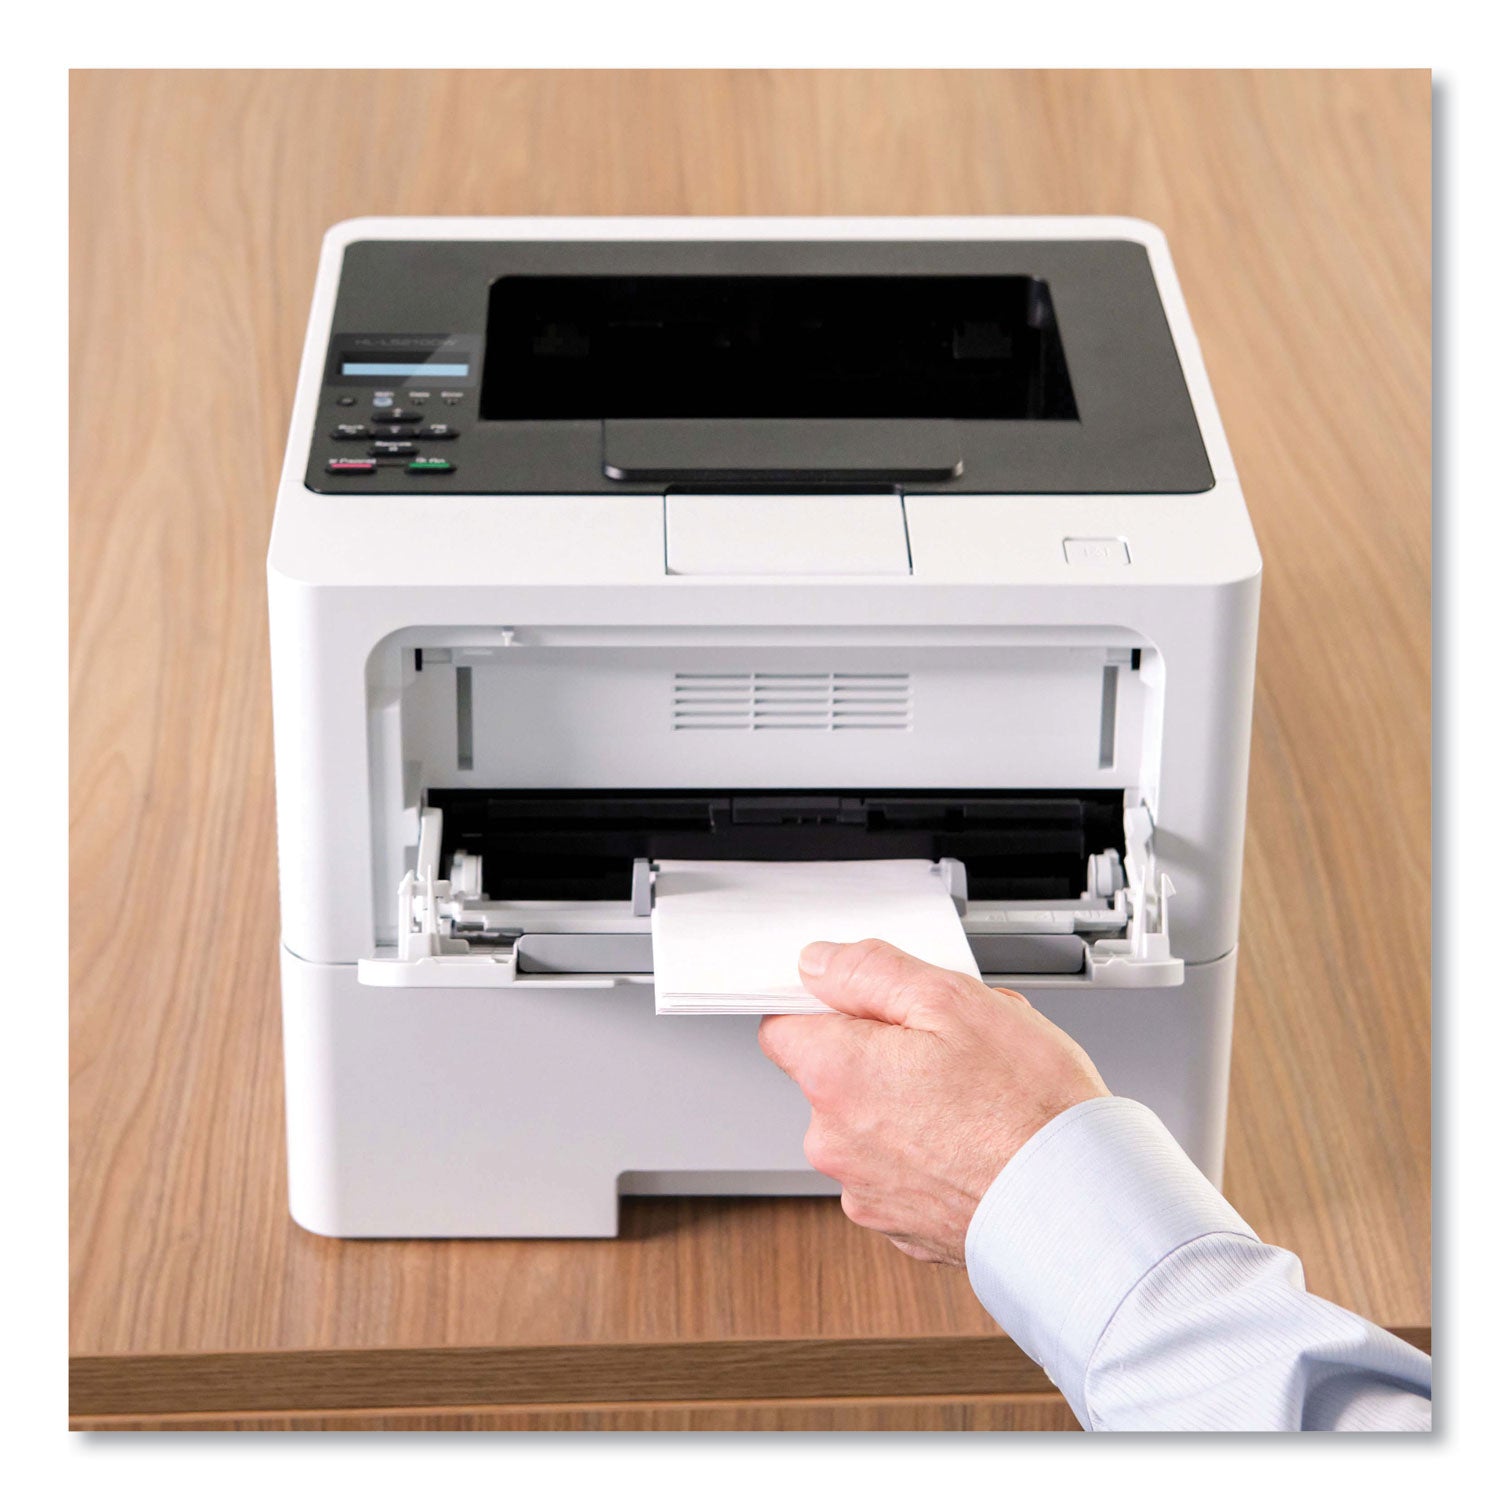 hl-l6210dw-business-monochrome-laser-printer_brthll6210dw - 5